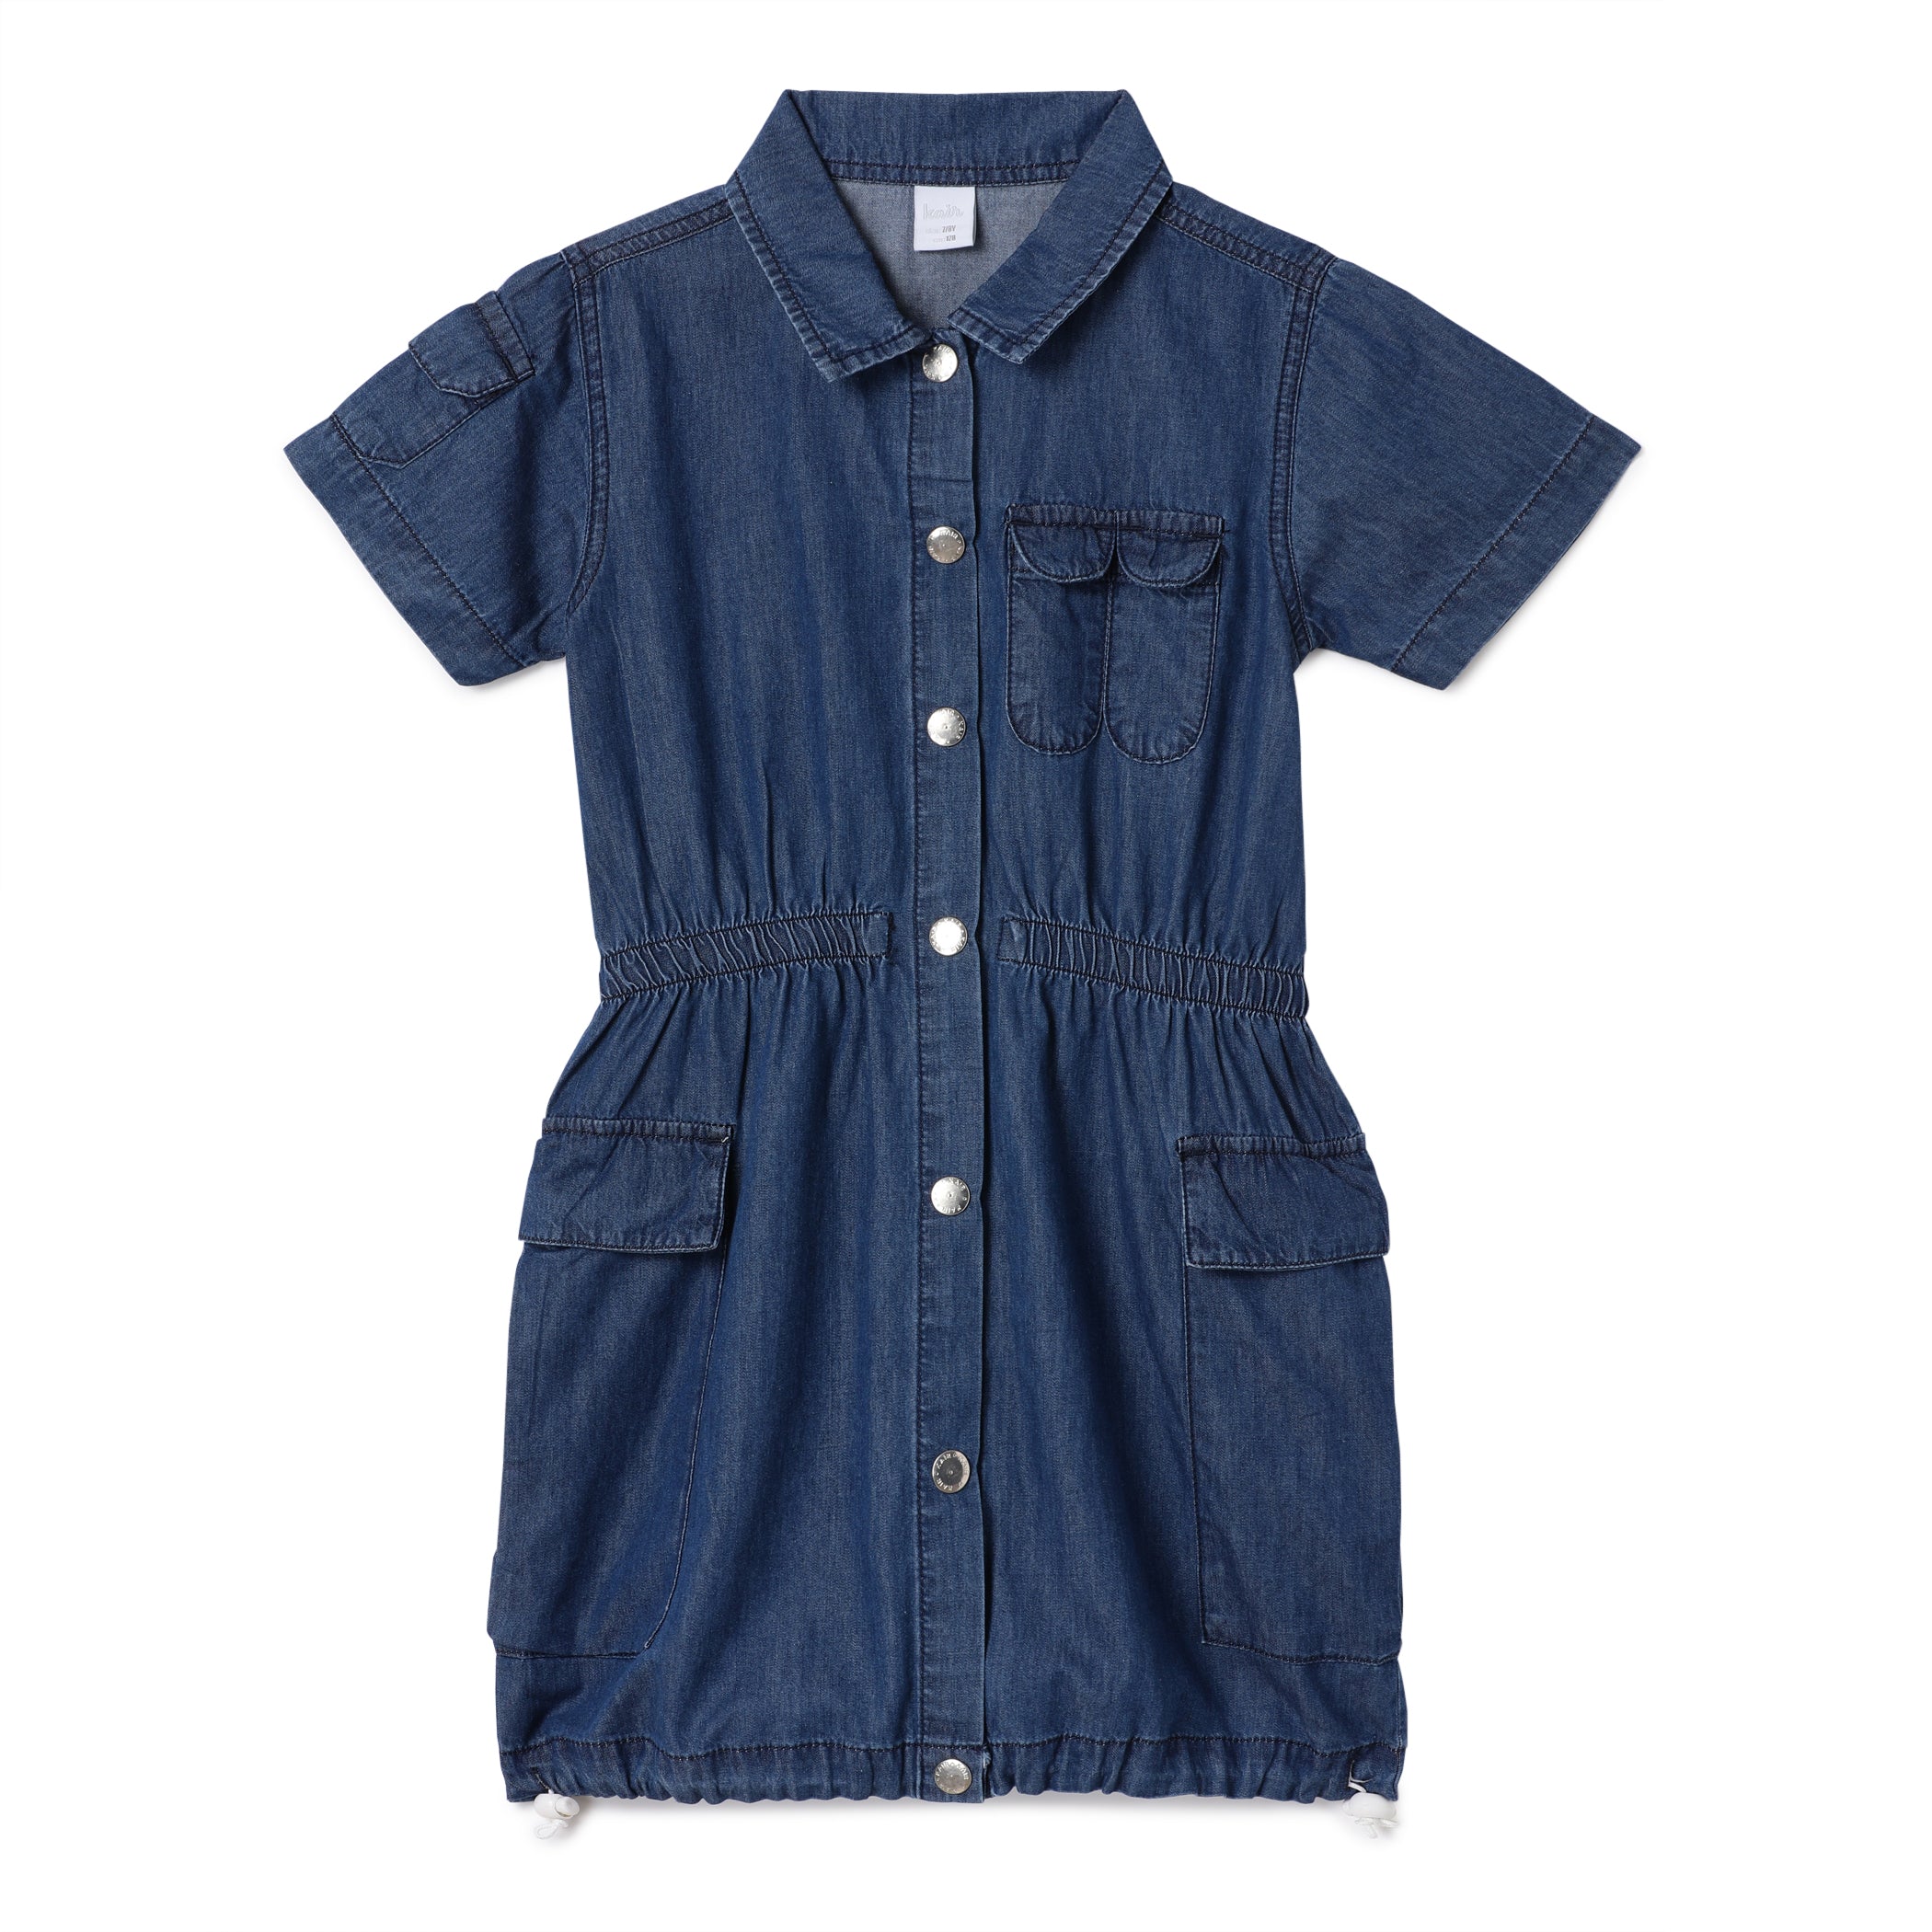 Buy CREATIVE KIDS Girls Navy Half Sleeve Collared Denim Shirt Dress with  Belt at Amazon.in